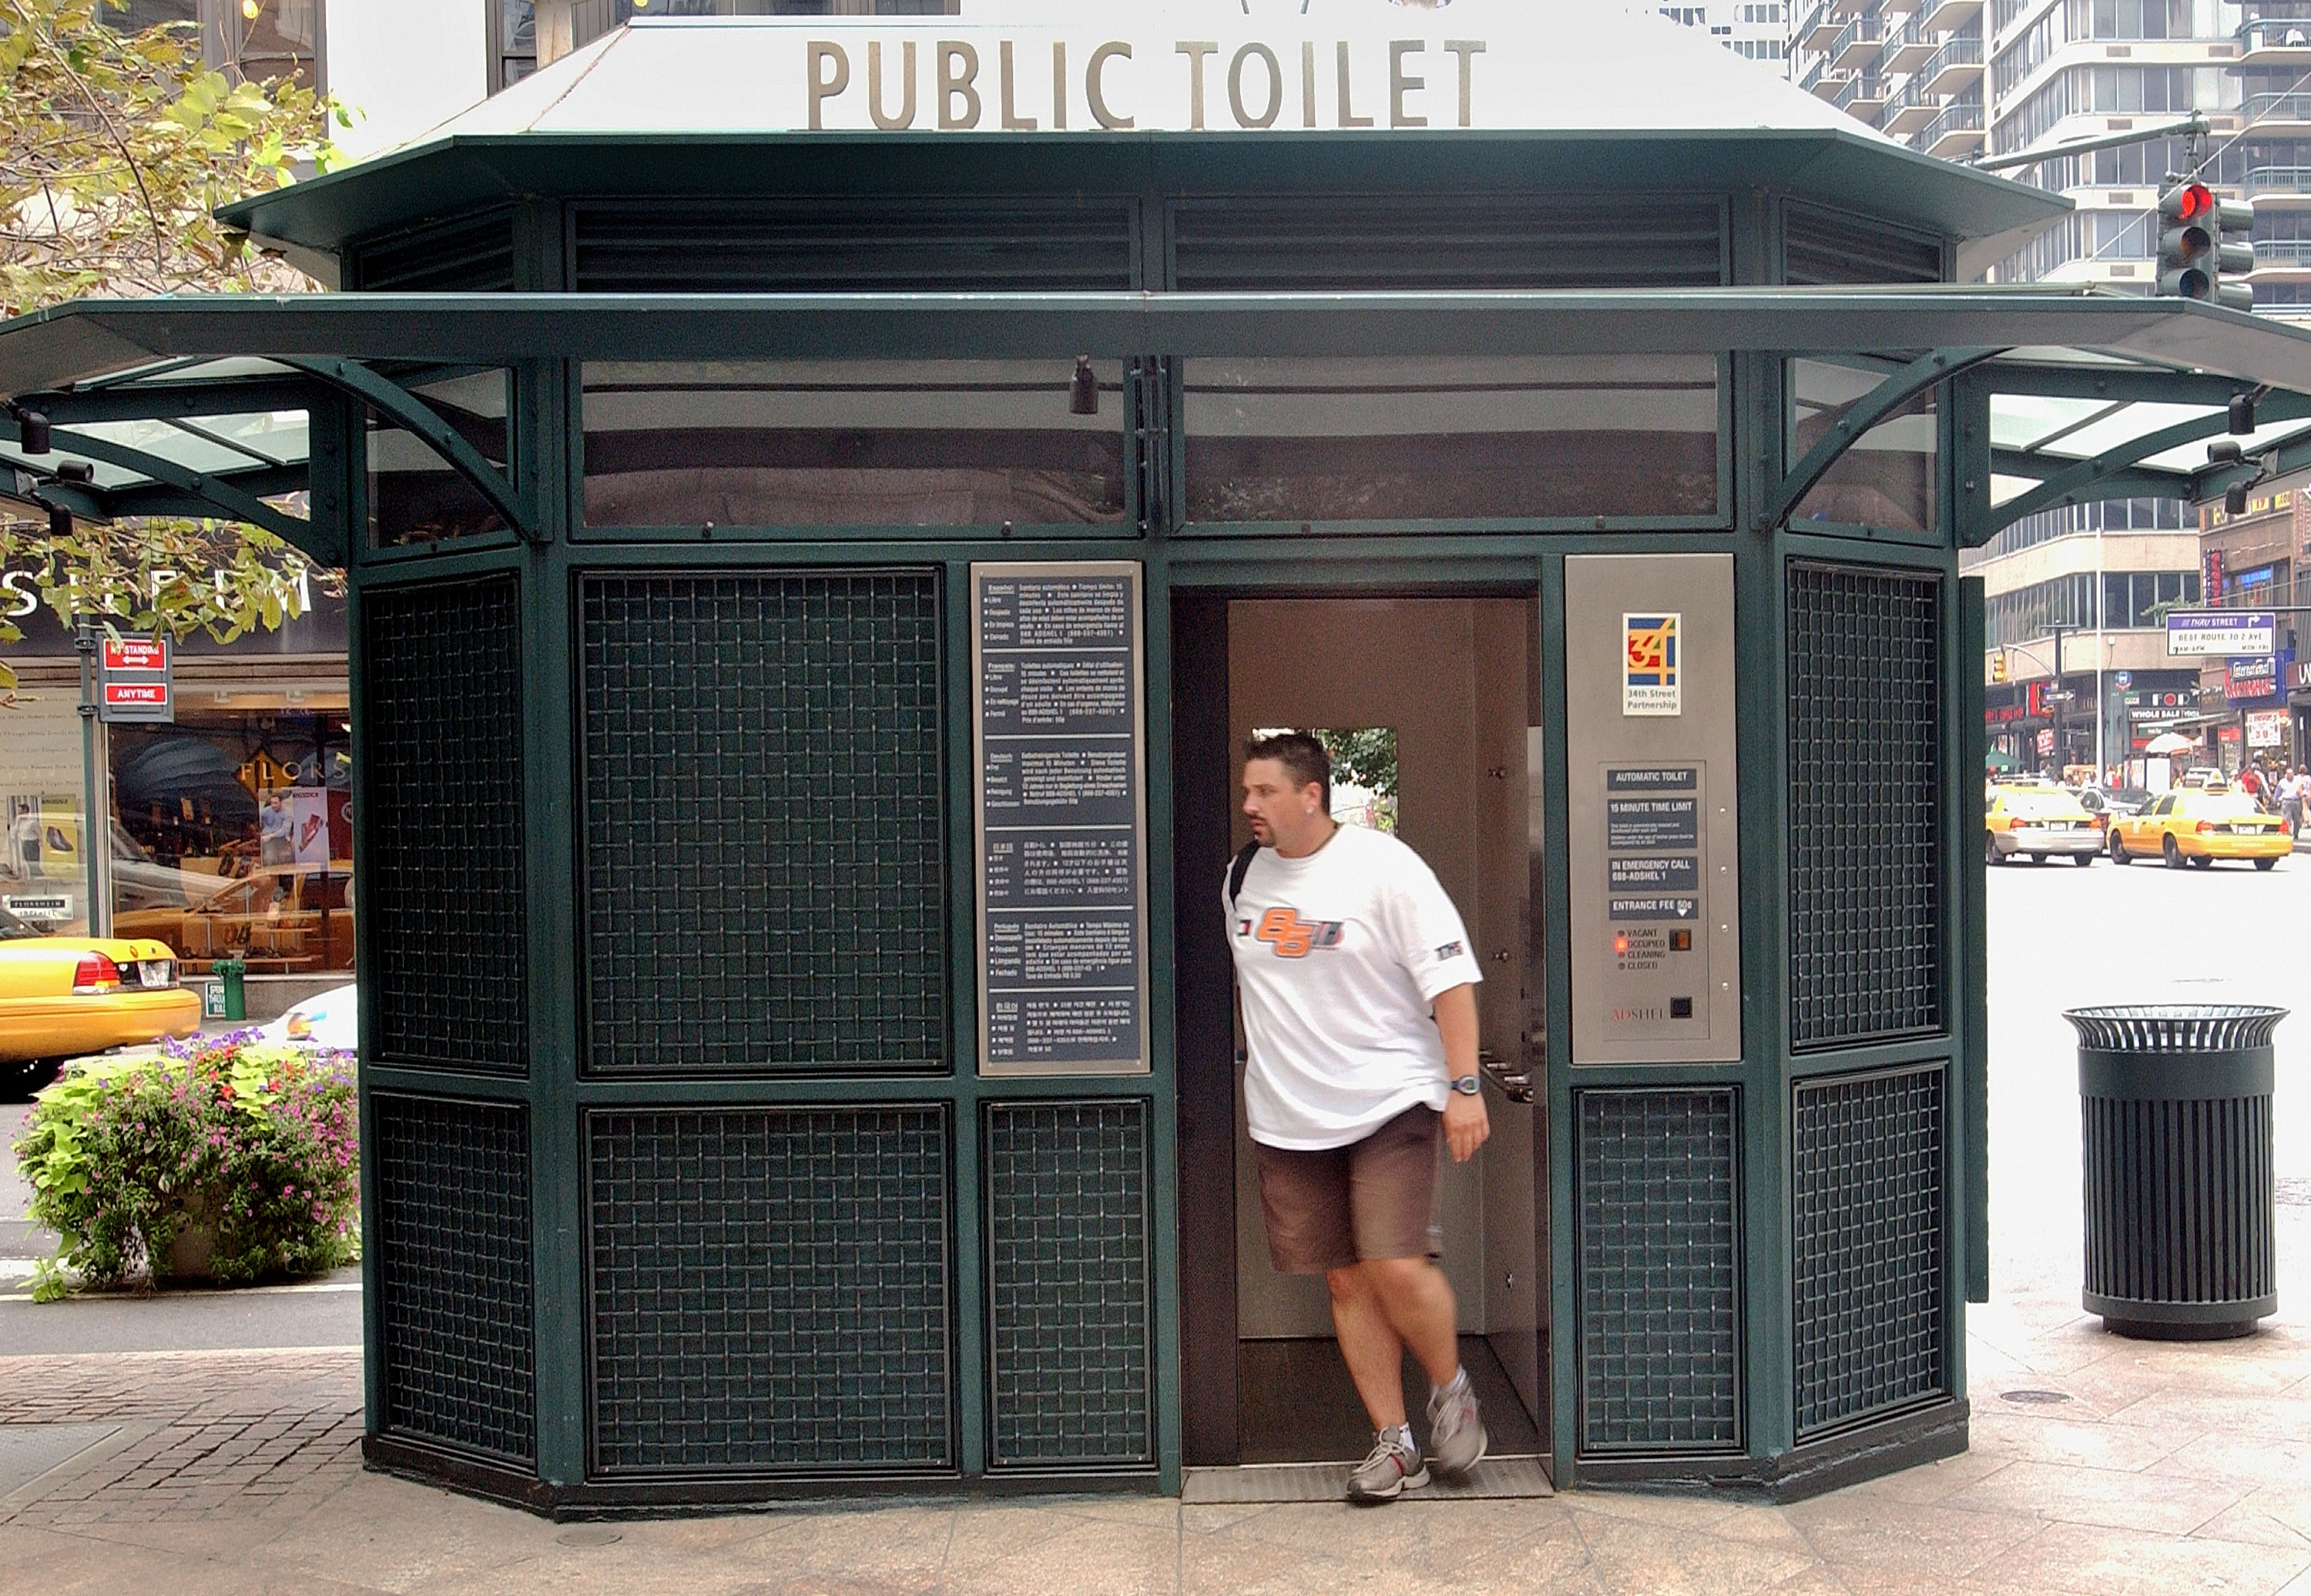 Public 1.0. Общественный туалет в США. Общественный туалет в Австралии. Общественные туалеты Нью Йорка фото. Public Toilet.